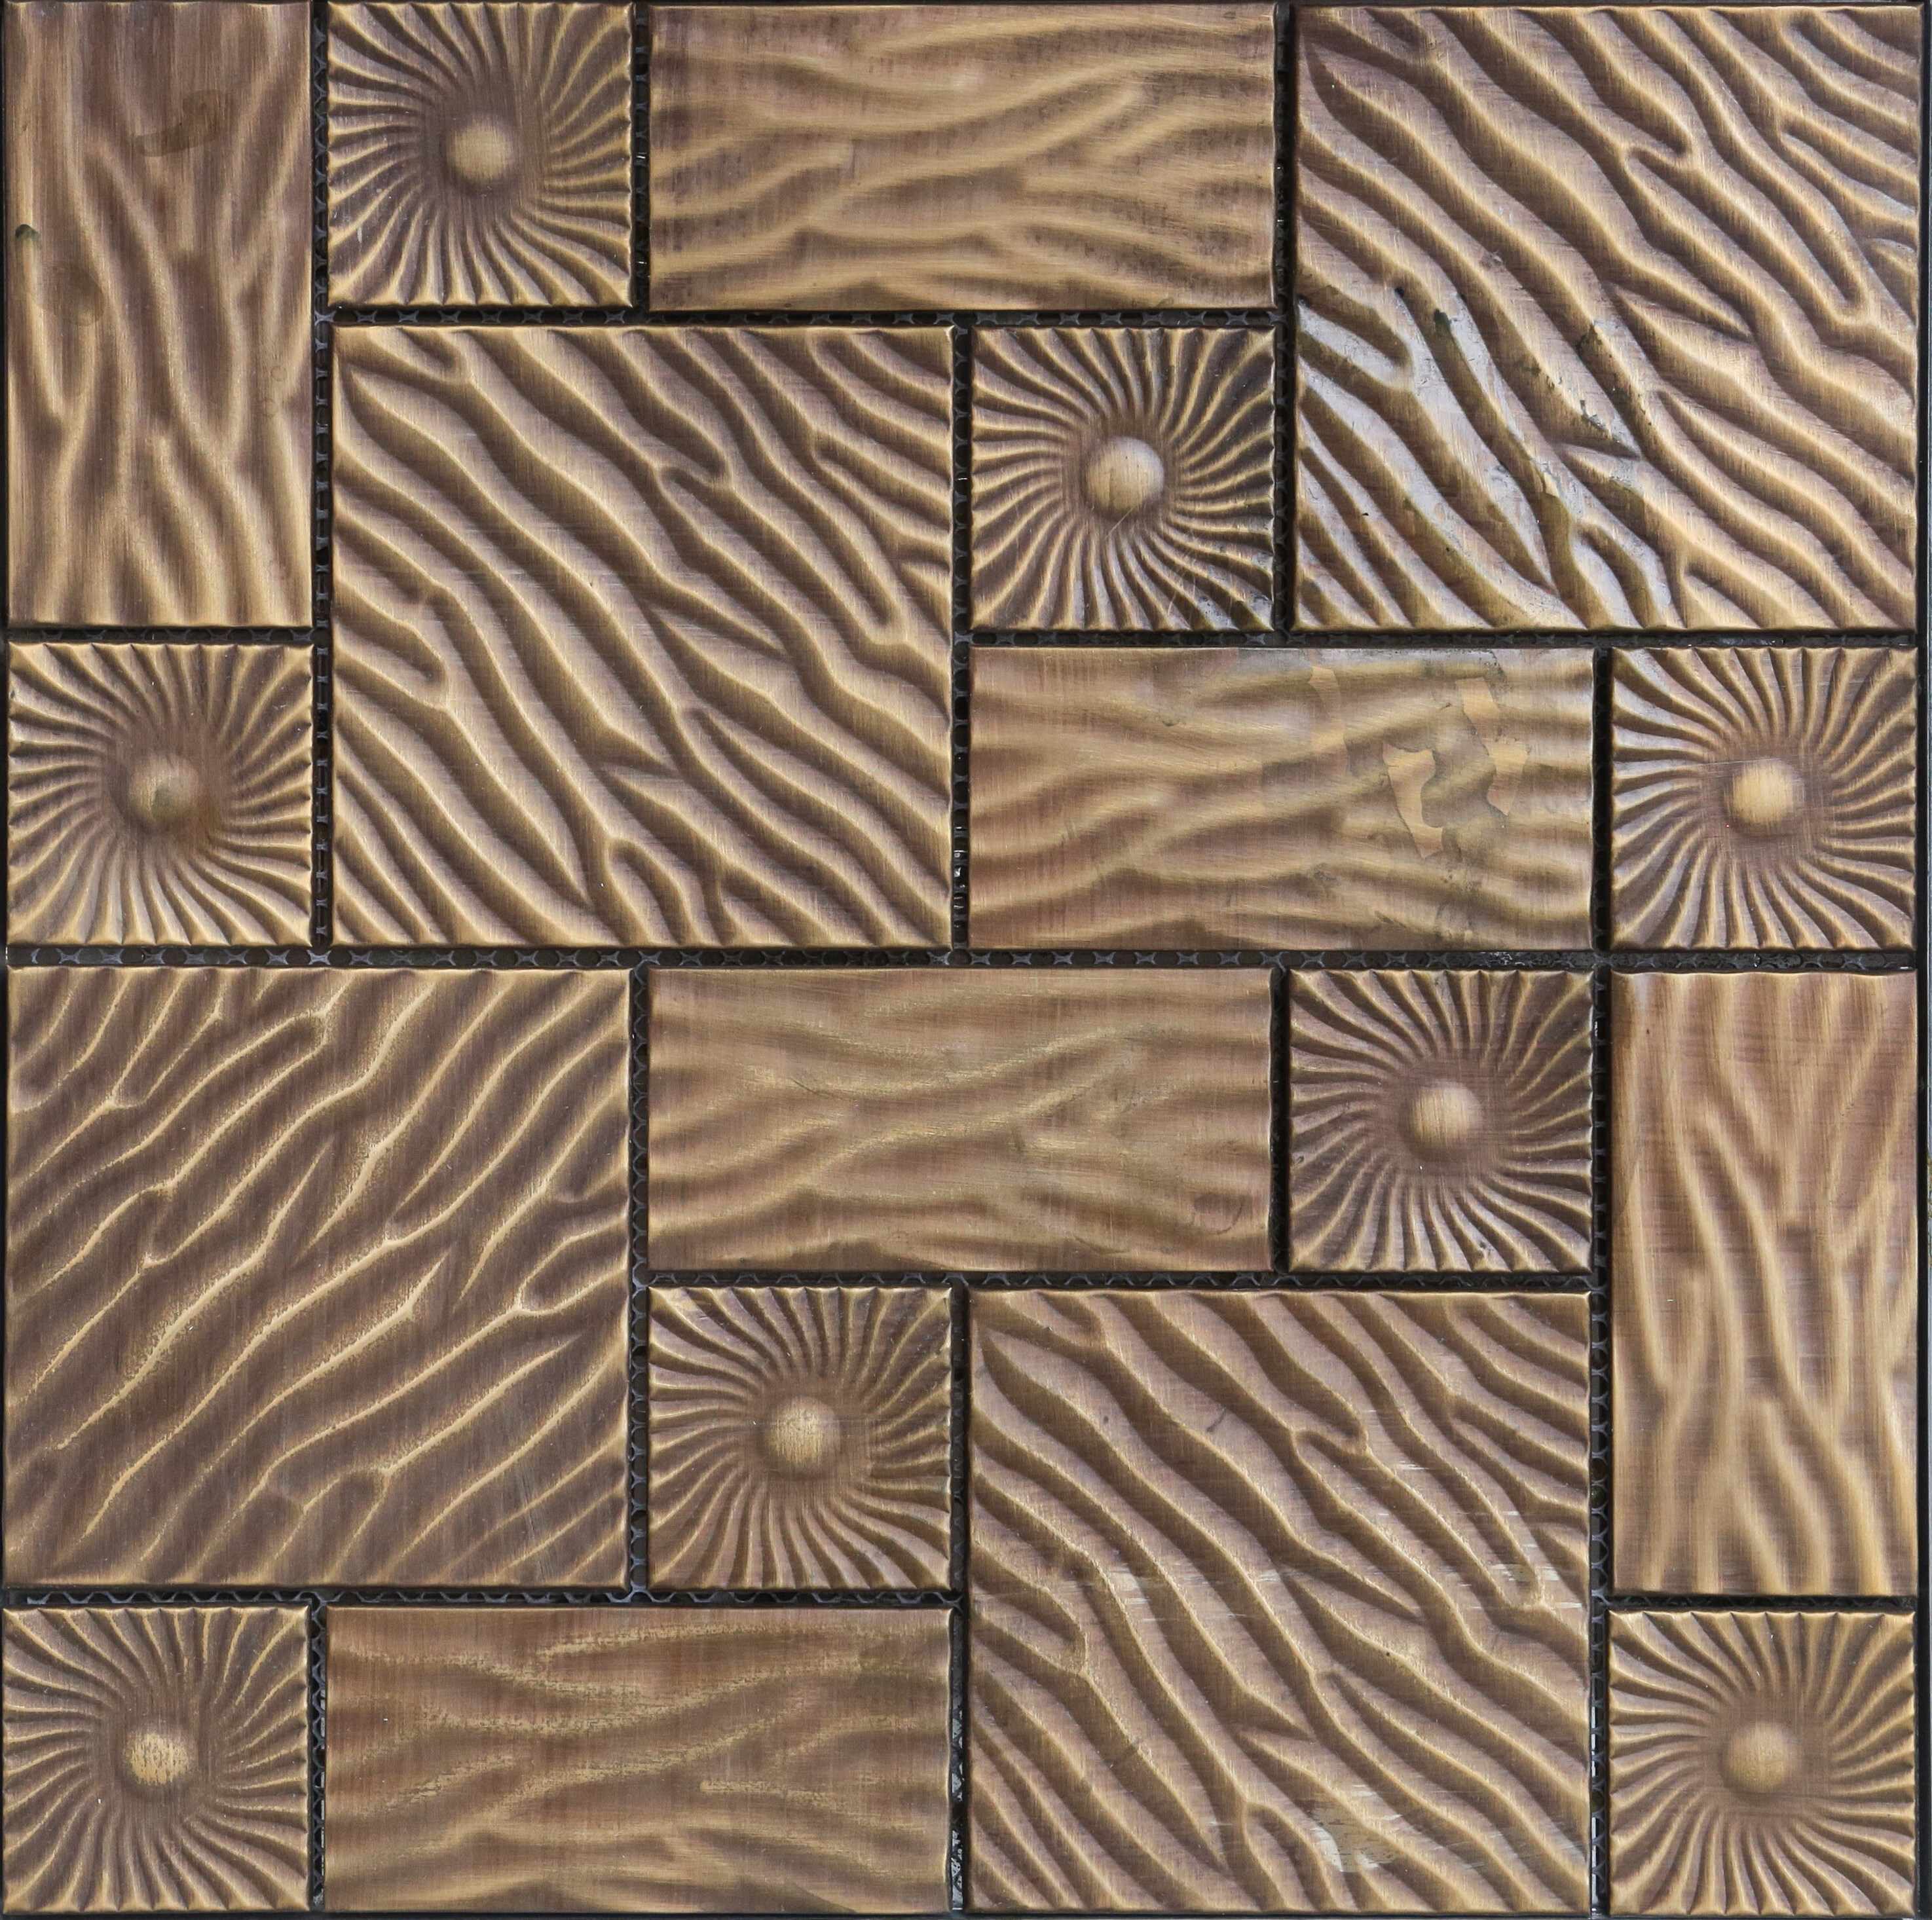 New Original Design Polished Leaf Shaped Mosaic Tiles Wall Flooring Decoration